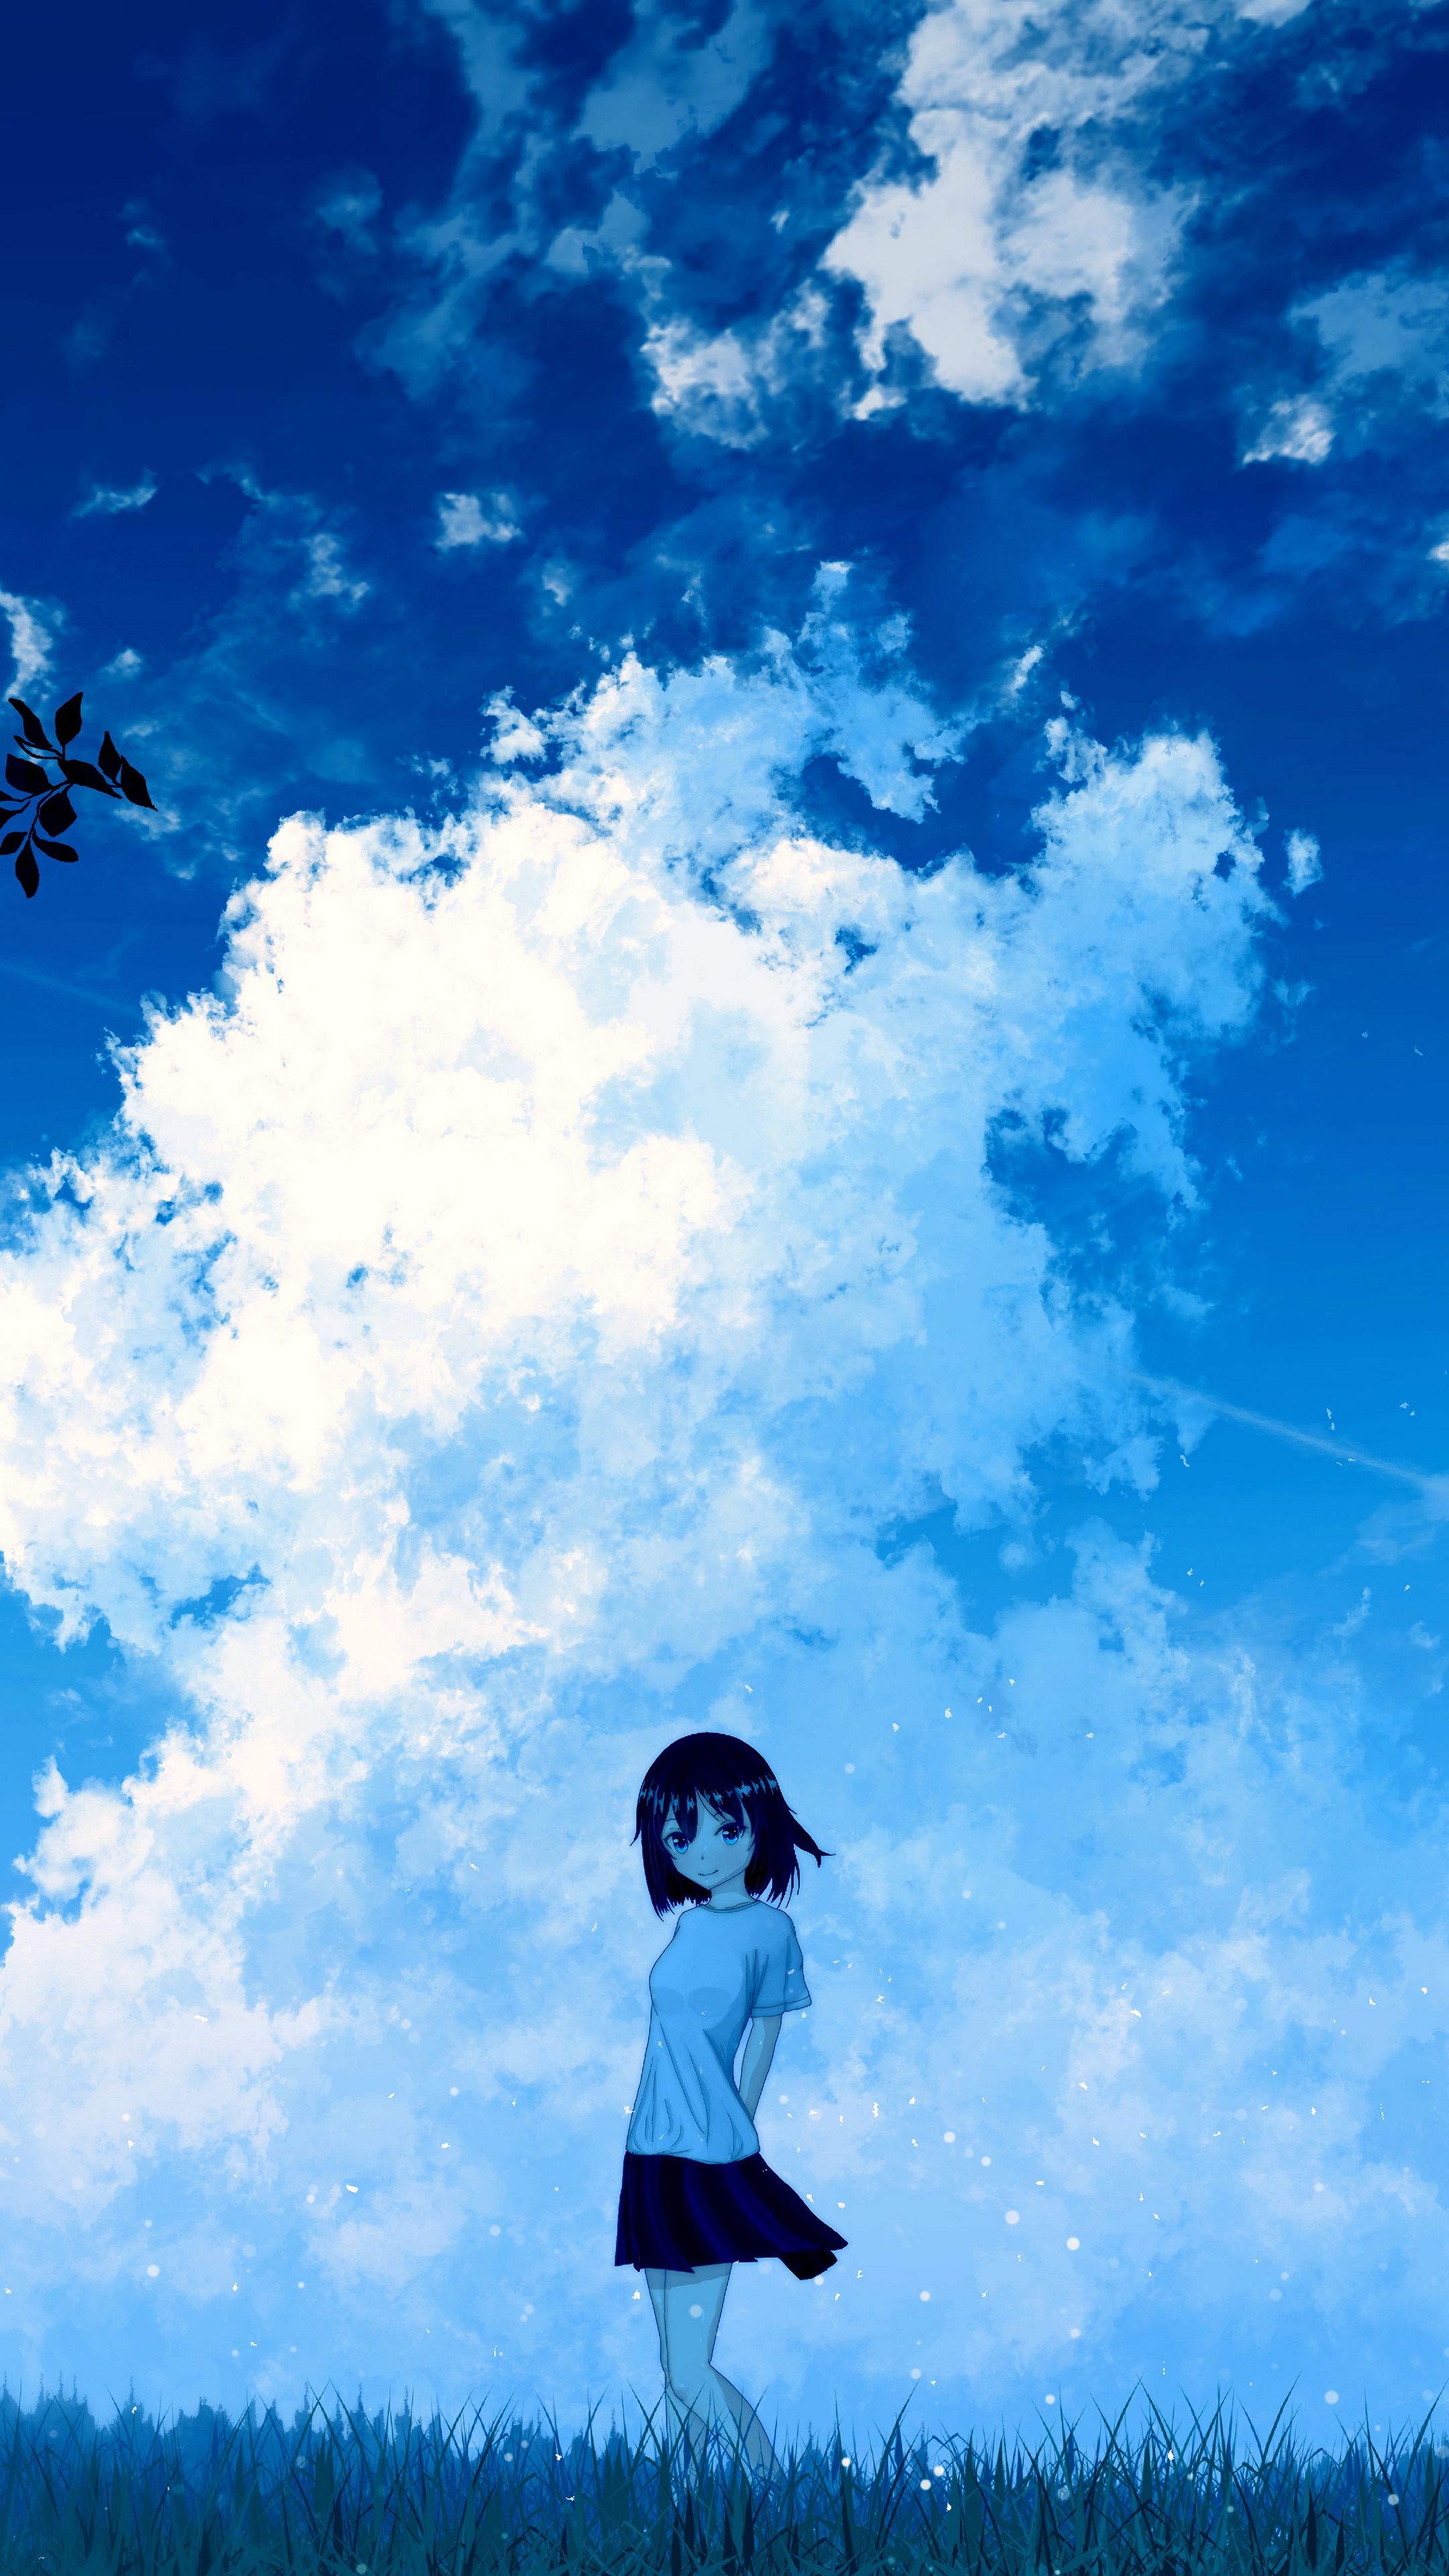 Download Wallpaper 2160x3840 Anime Girl Sky Clouds Samsung Galaxy S4 S5 Note Sony Xperia Z Z1 Z2 Z3 Htc One Lenovo Vibe Hd Background